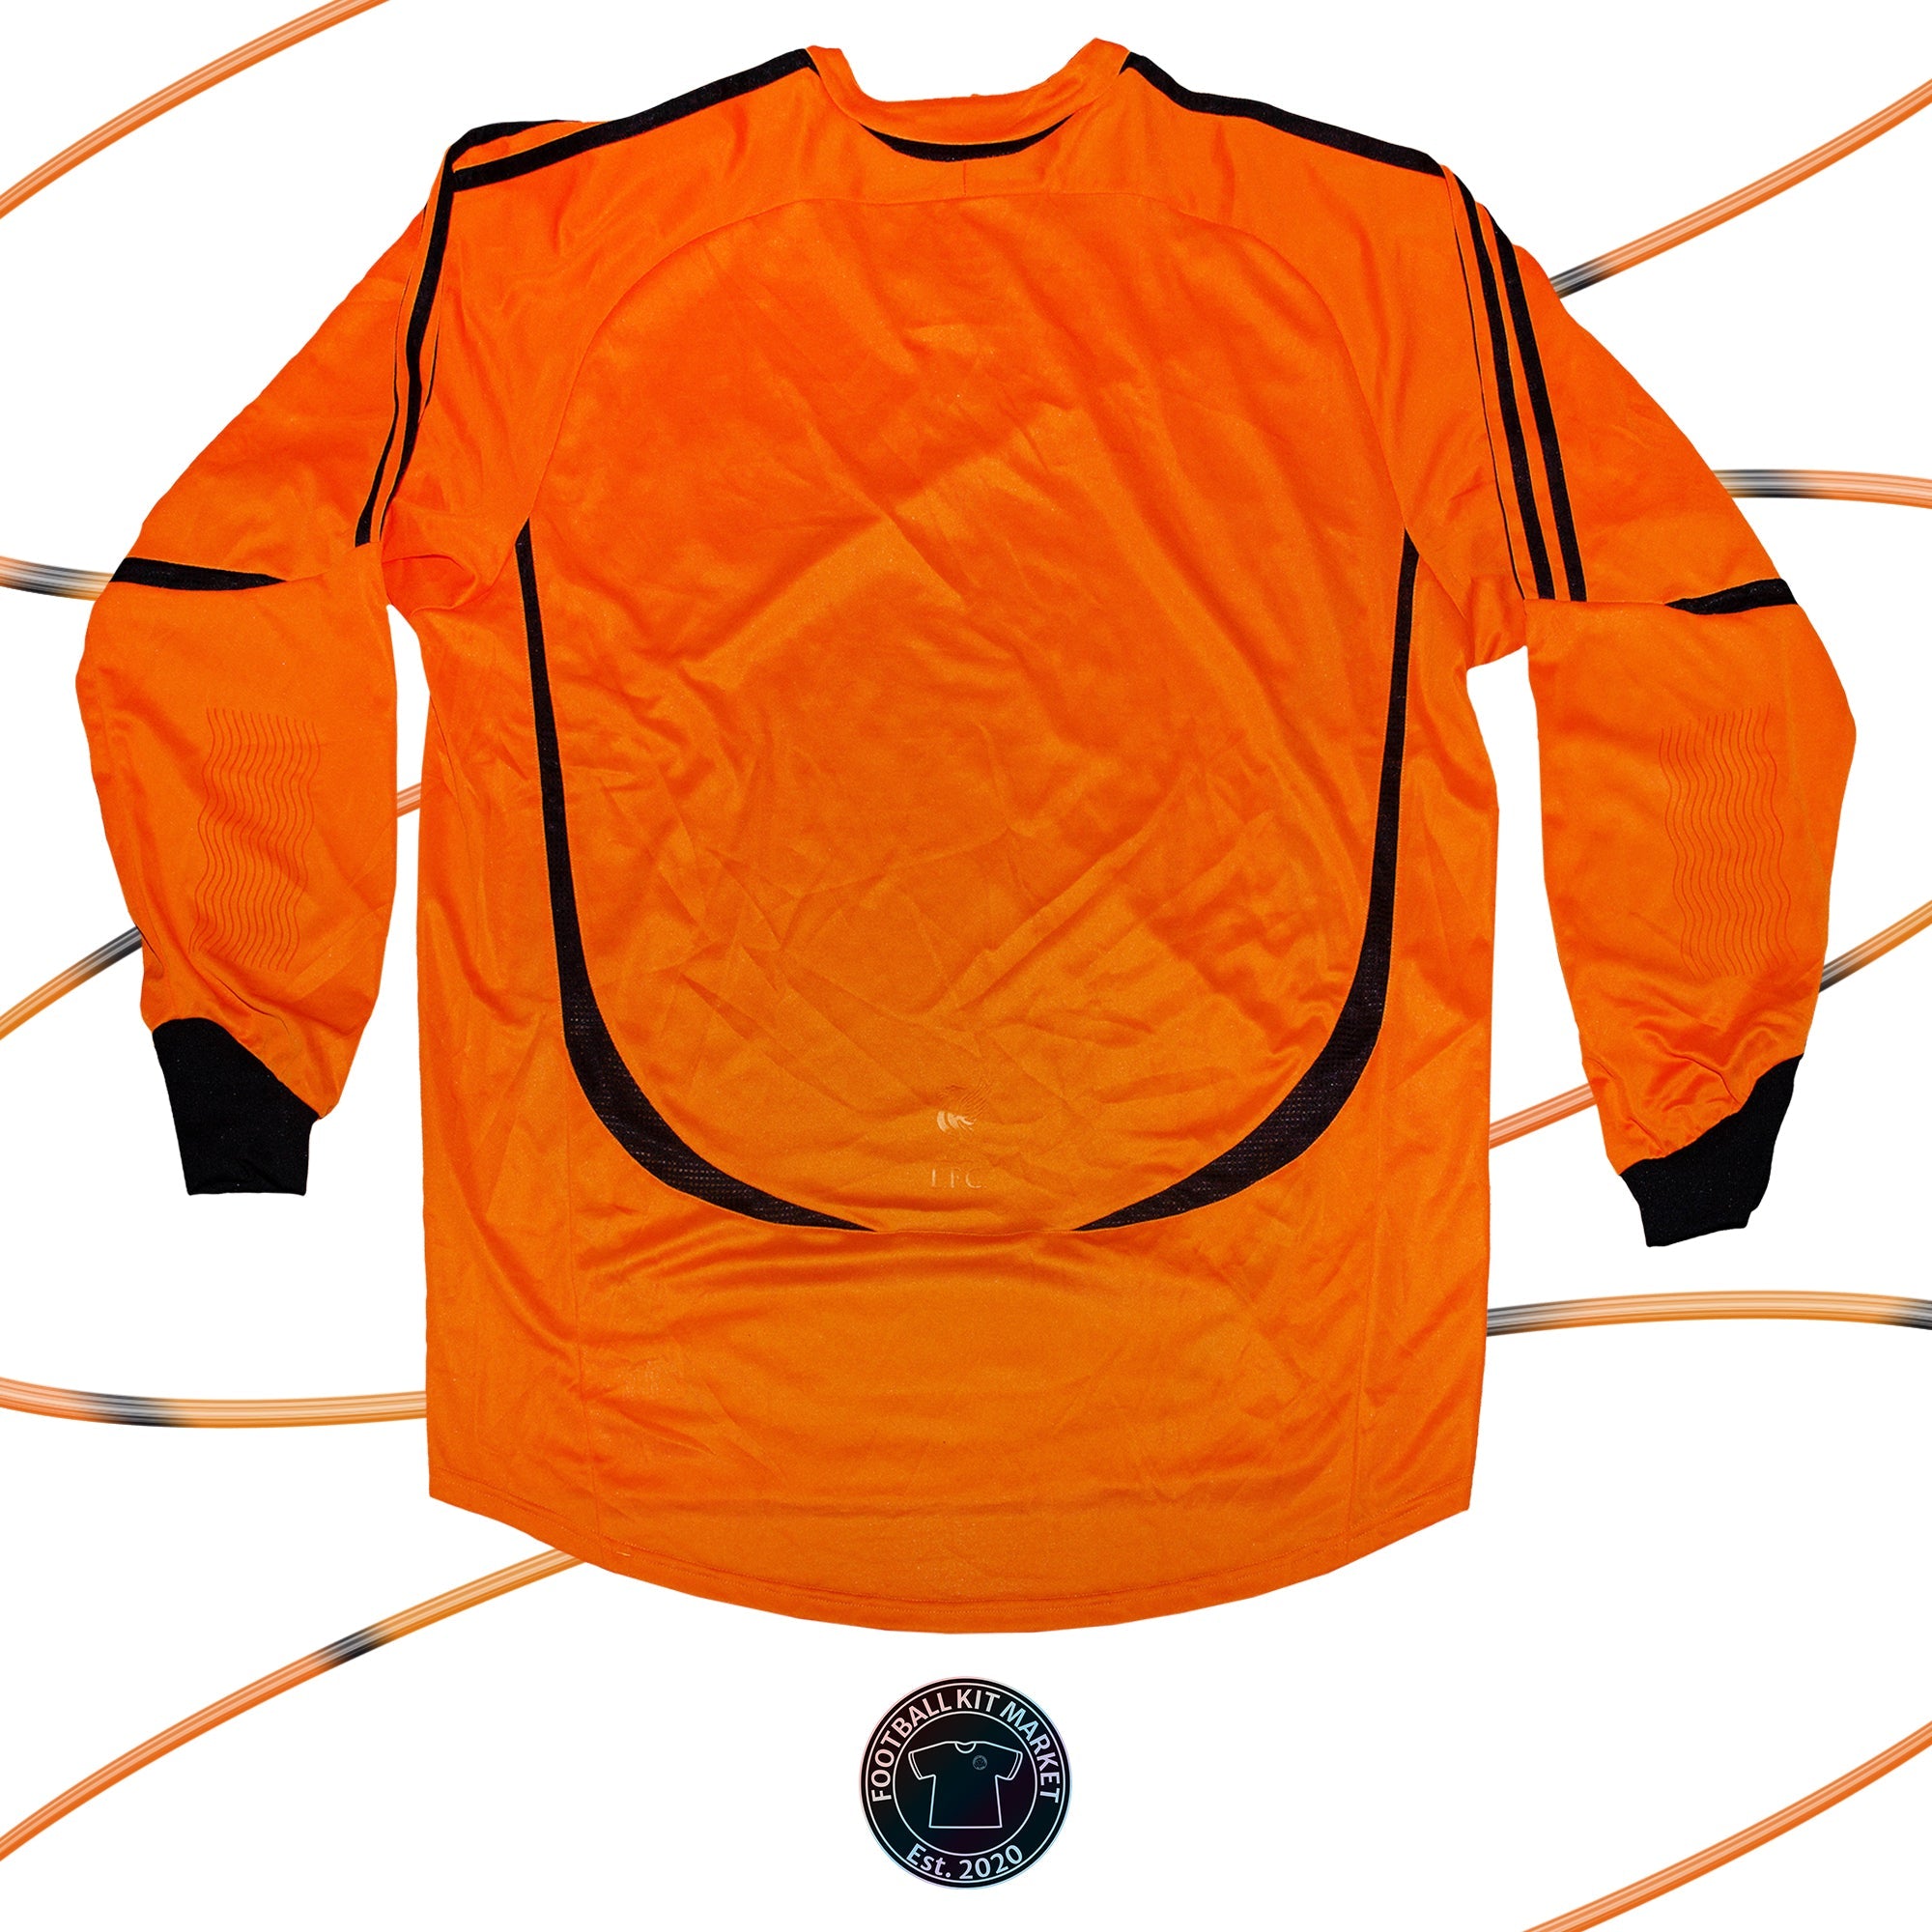 Genuine LIVERPOOL Goalkeeper (2006-2007) - ADIDAS (XXL) - Product Image from Football Kit Market